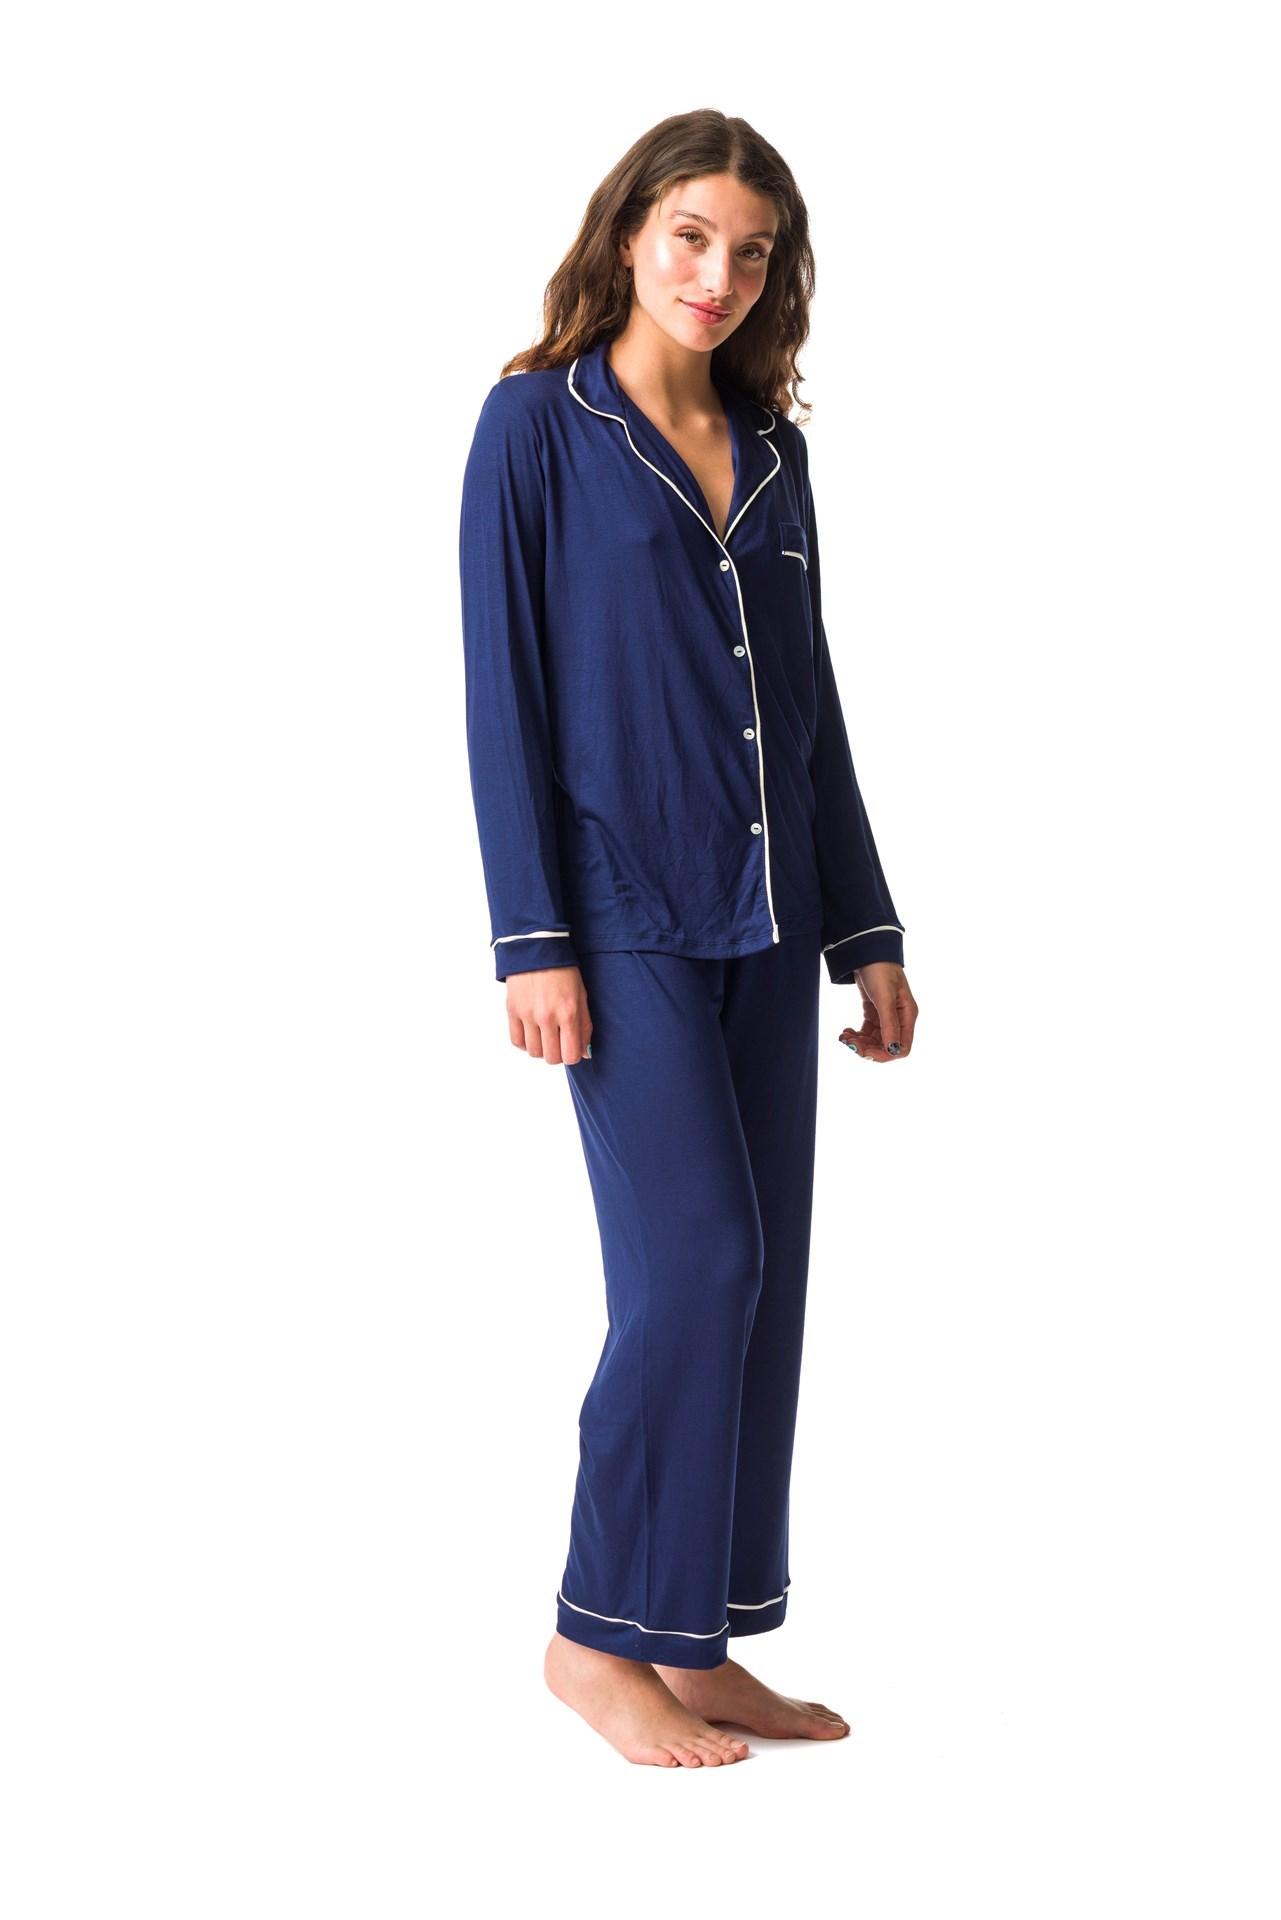 Donatella - Pijama Camisero Largo azul s